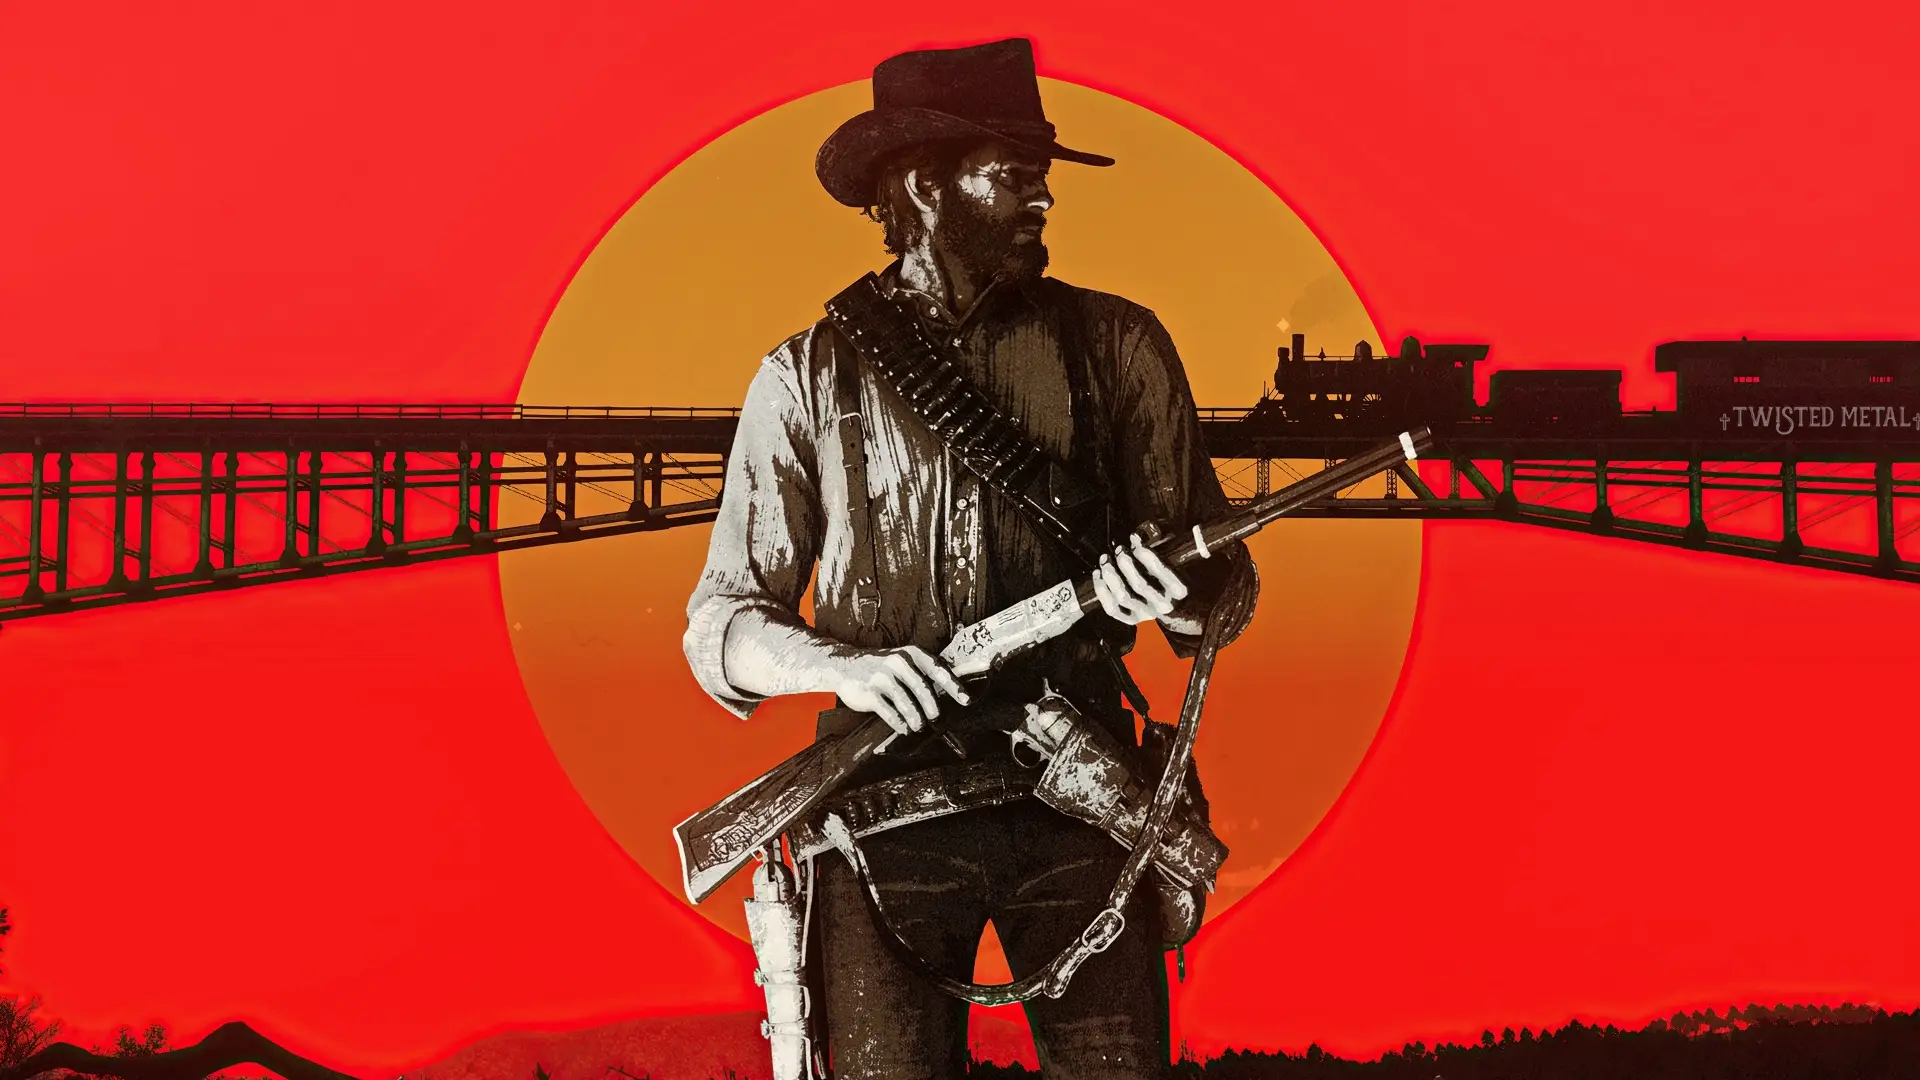 چگونه در Red Dead Redemption 2 سریع‌تر جا به جا شویم؟